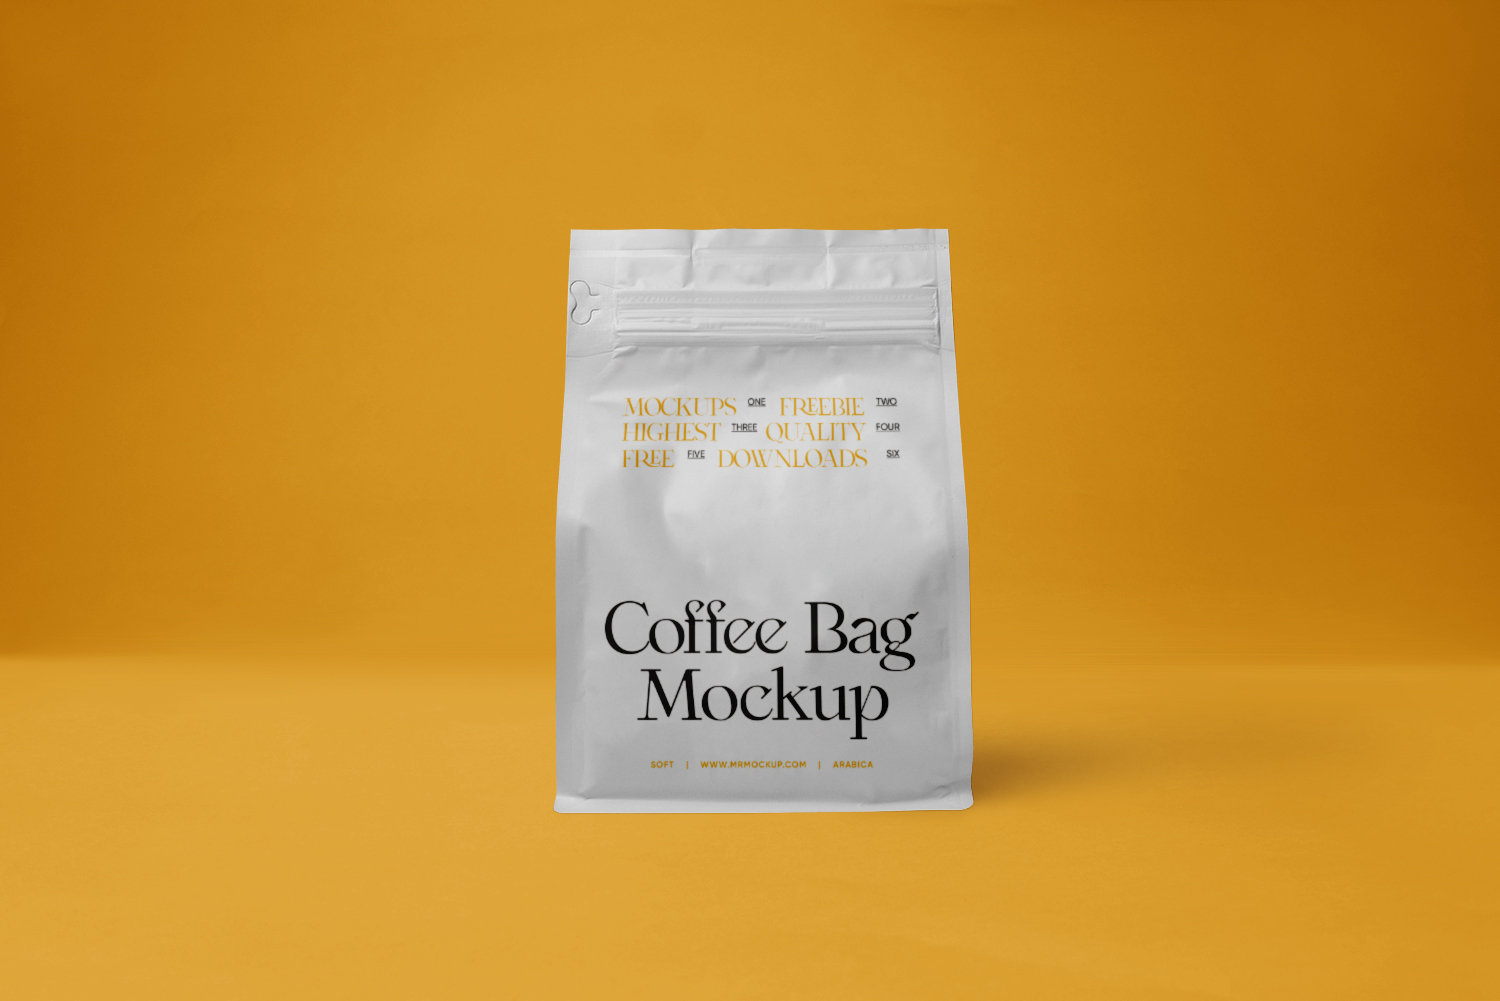 Coffee Bag Free Mockup